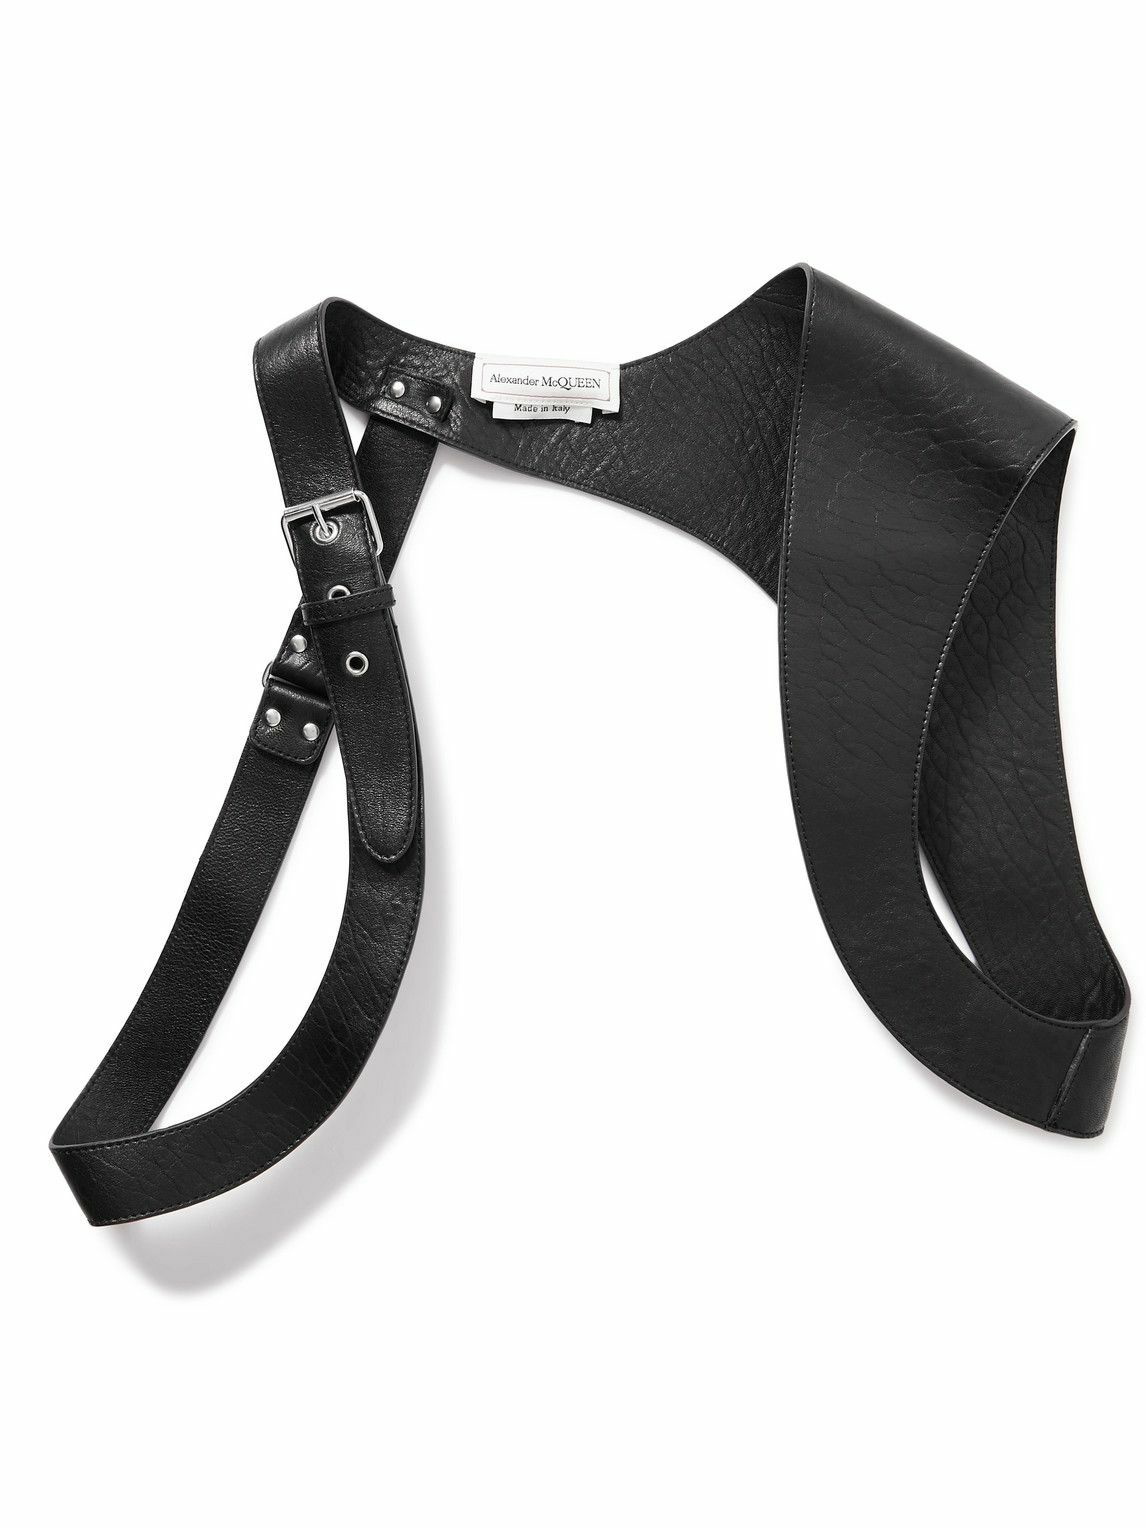 Alexander McQueen leather harness bralette black - StyleFrizz